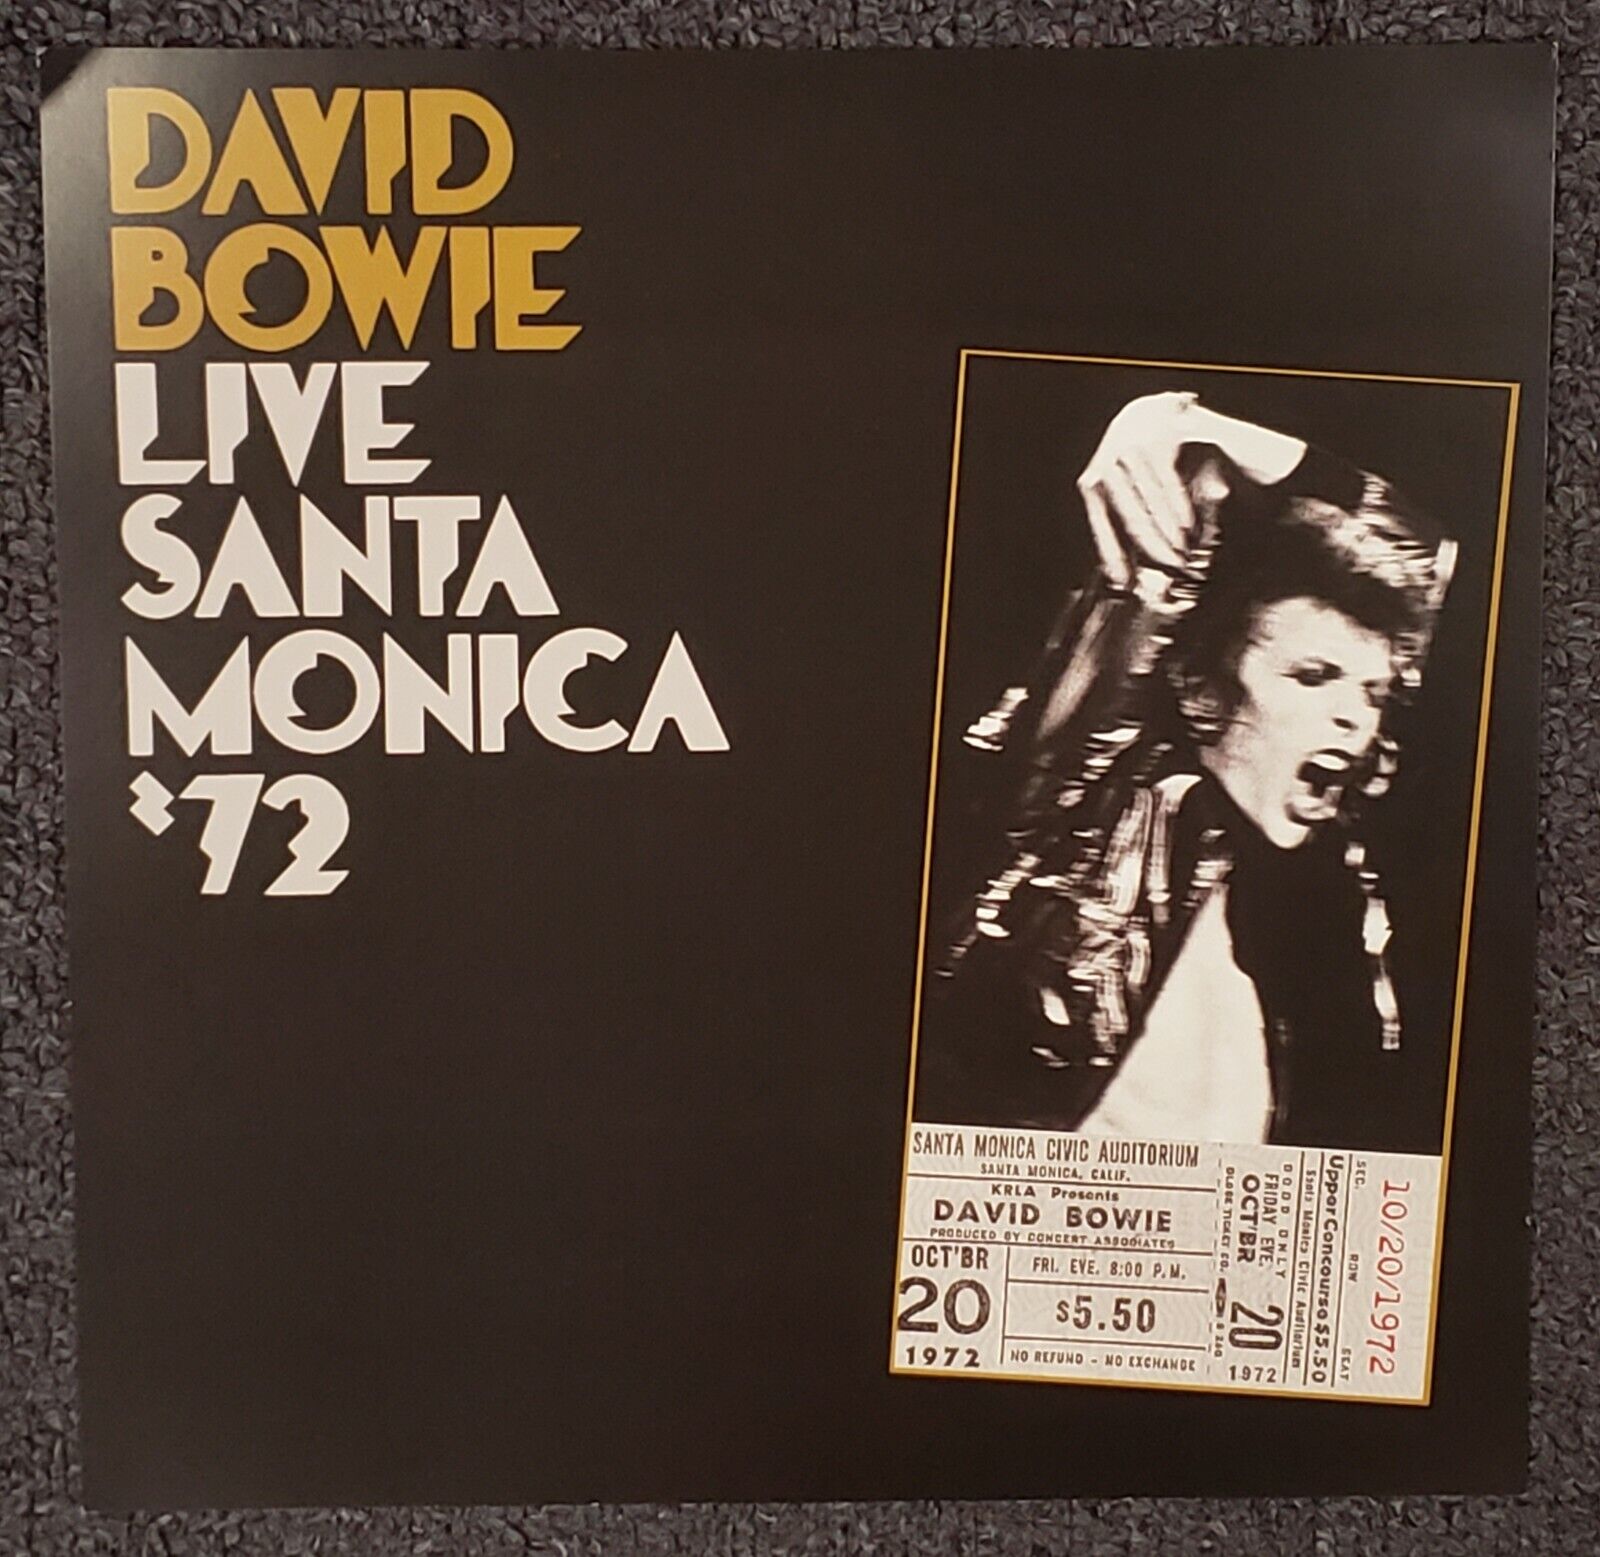 David Bowie Live Santa Monica '72 - 2016 CARDBOARD PROMO POSTER FLAT